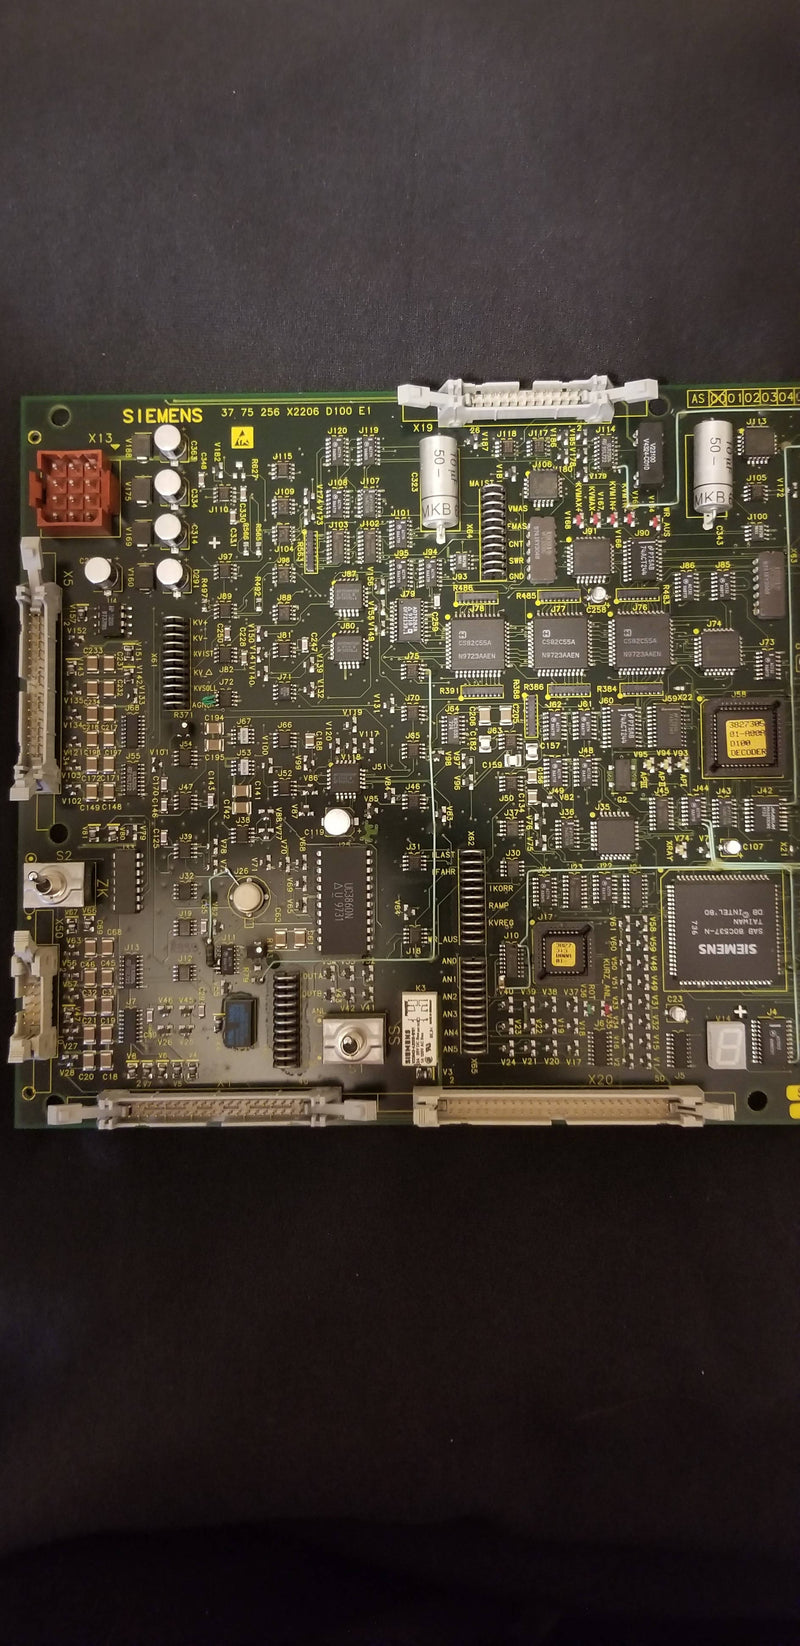 Siemens D100 E1 Master Board (PN 37 75 256 X2206)